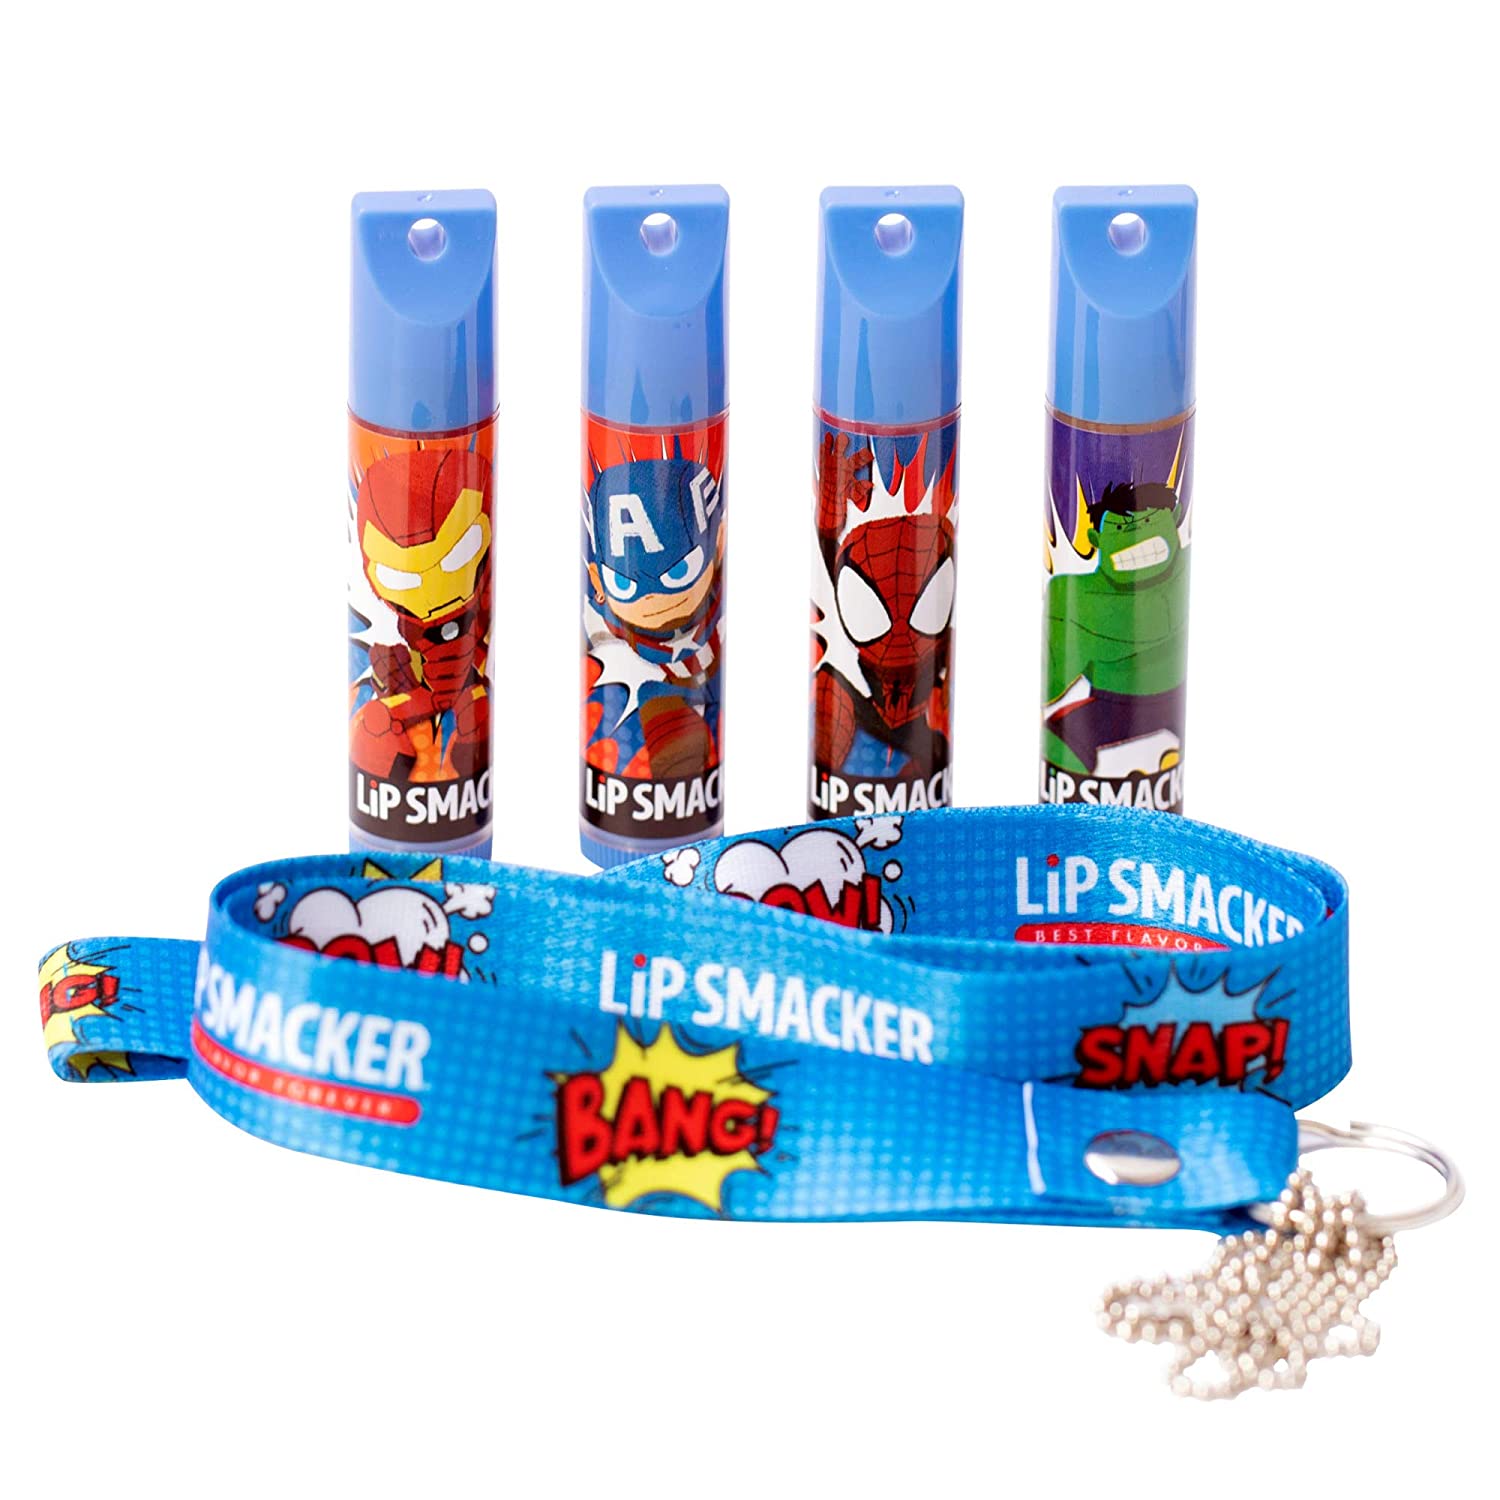 4 pc. Lip Smacker Flavored Balm Set With Lanyard - Marvel $3.42 / Unicorn $3.70 - Free Ship w/Prime